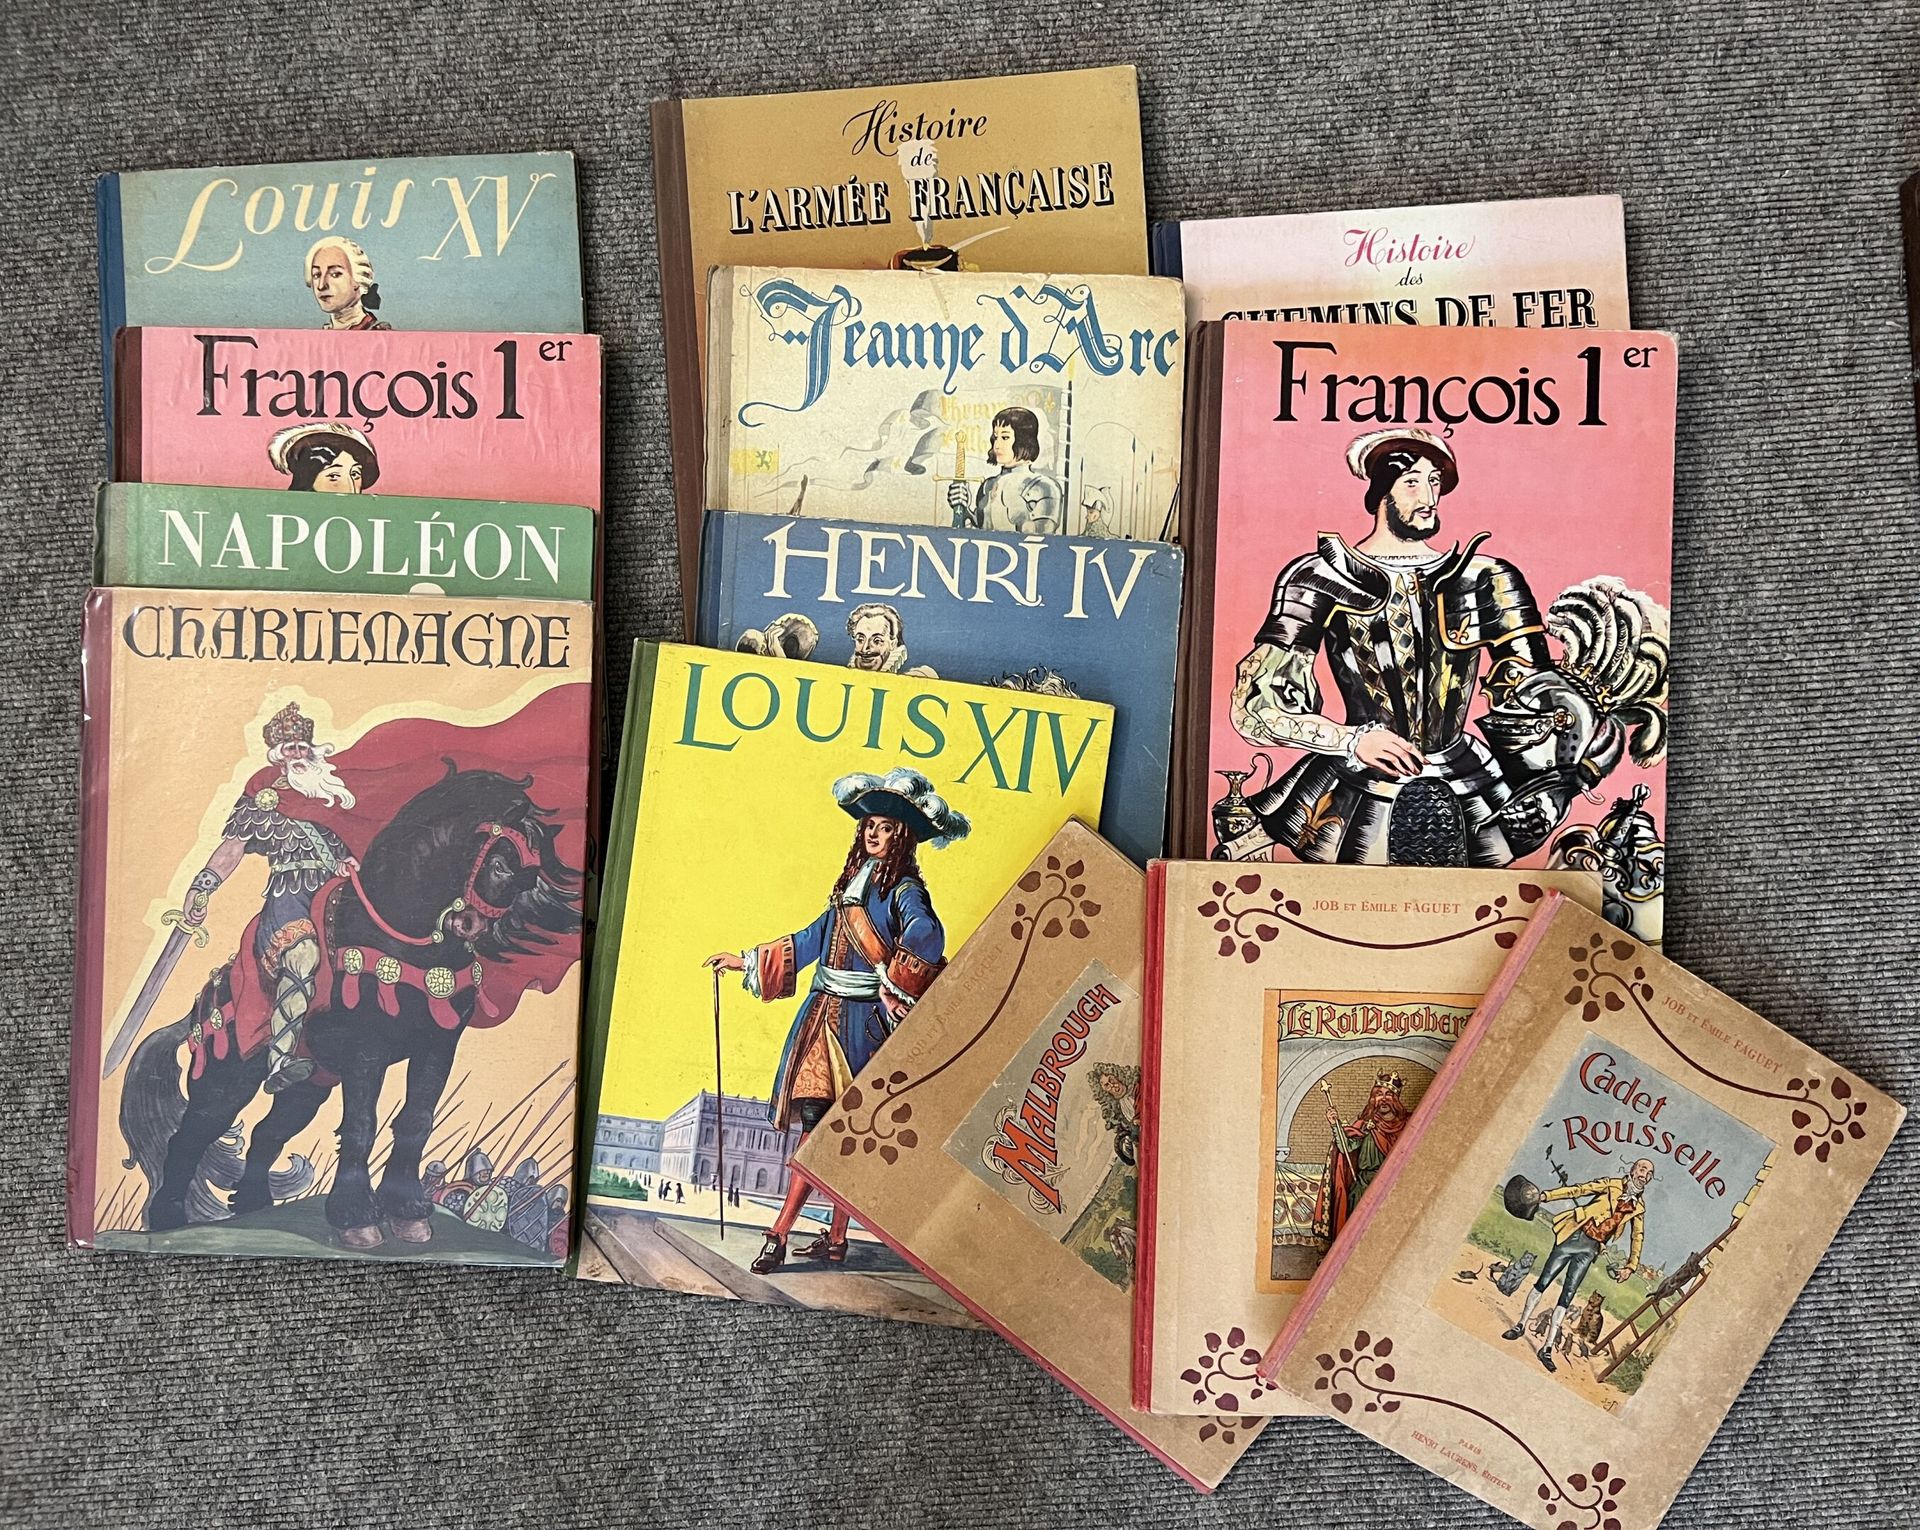 Null DIX VOLUMEN :
Sammlung Albums de France :
Jeanne d'Arc
Heinrich IV.
Ludwig &hellip;